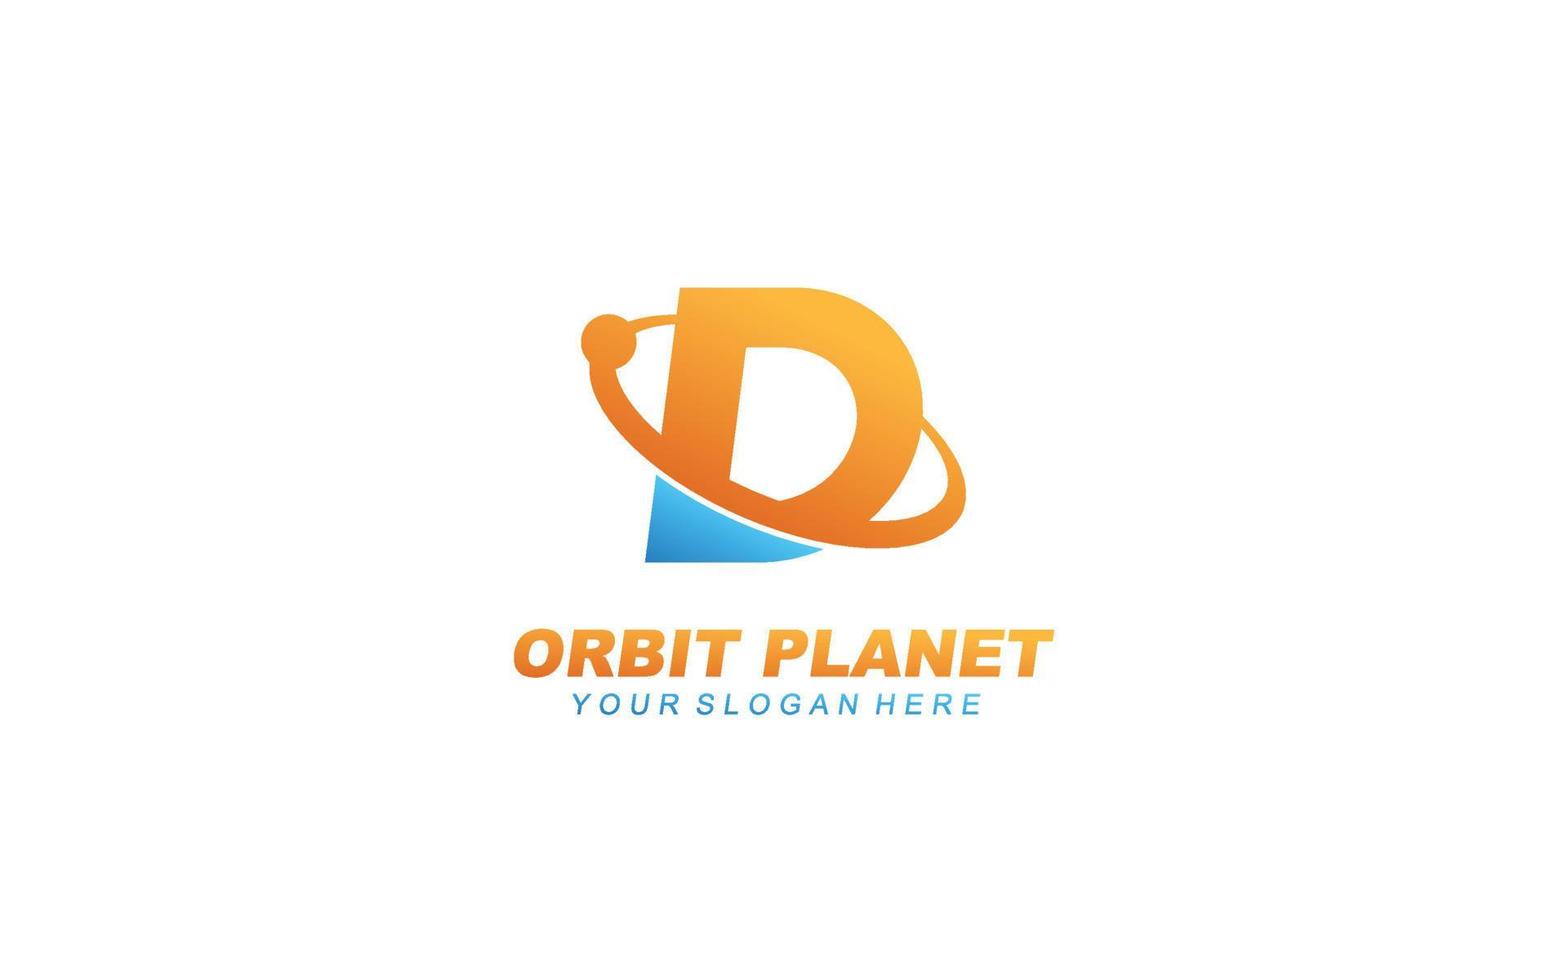 D planet logo design inspiration. Vector letter template design for brand.